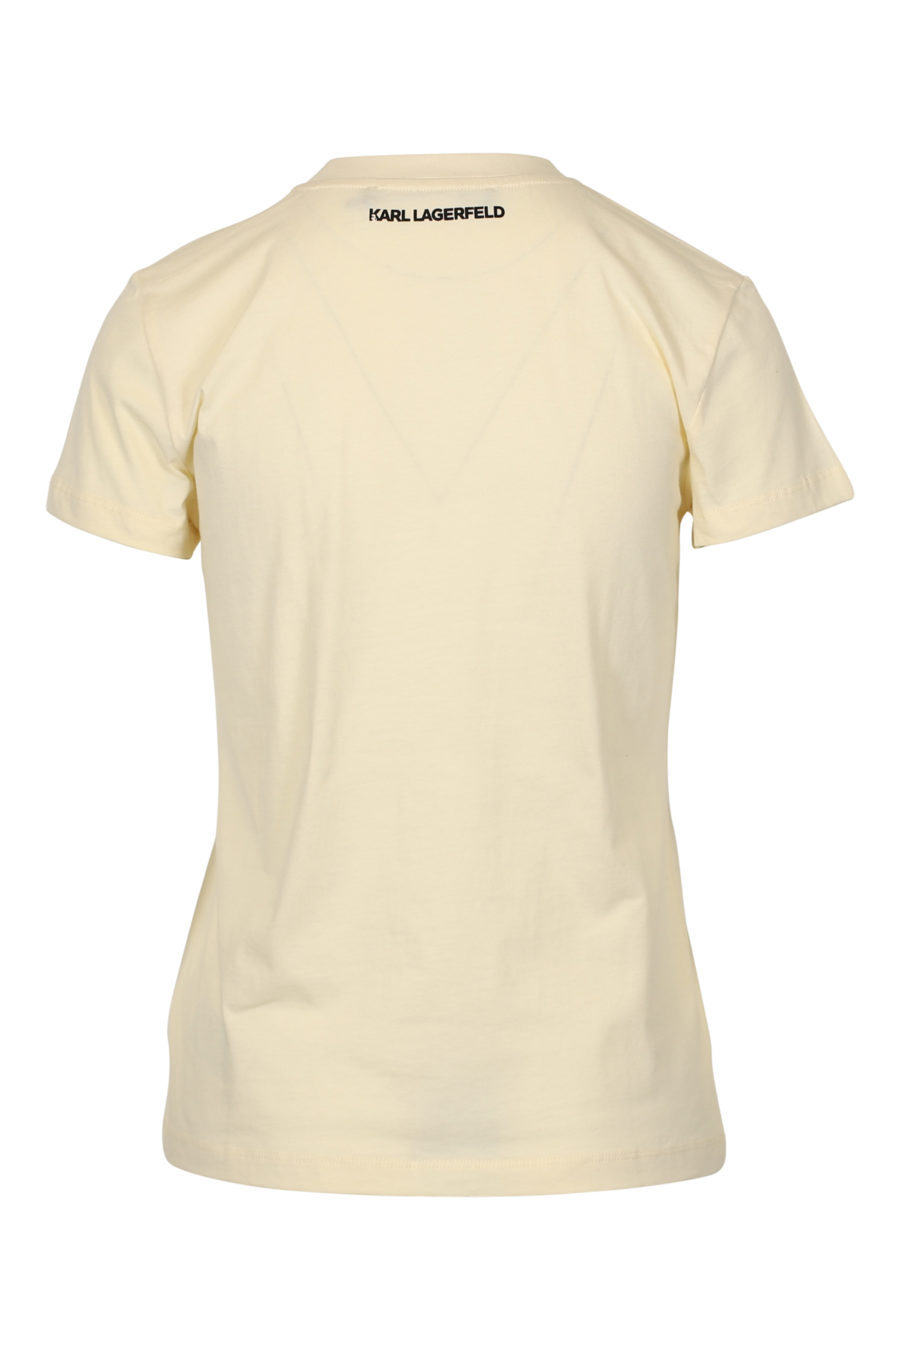 Camiseta blanco roto bordado "Perfil" - IMG 3017